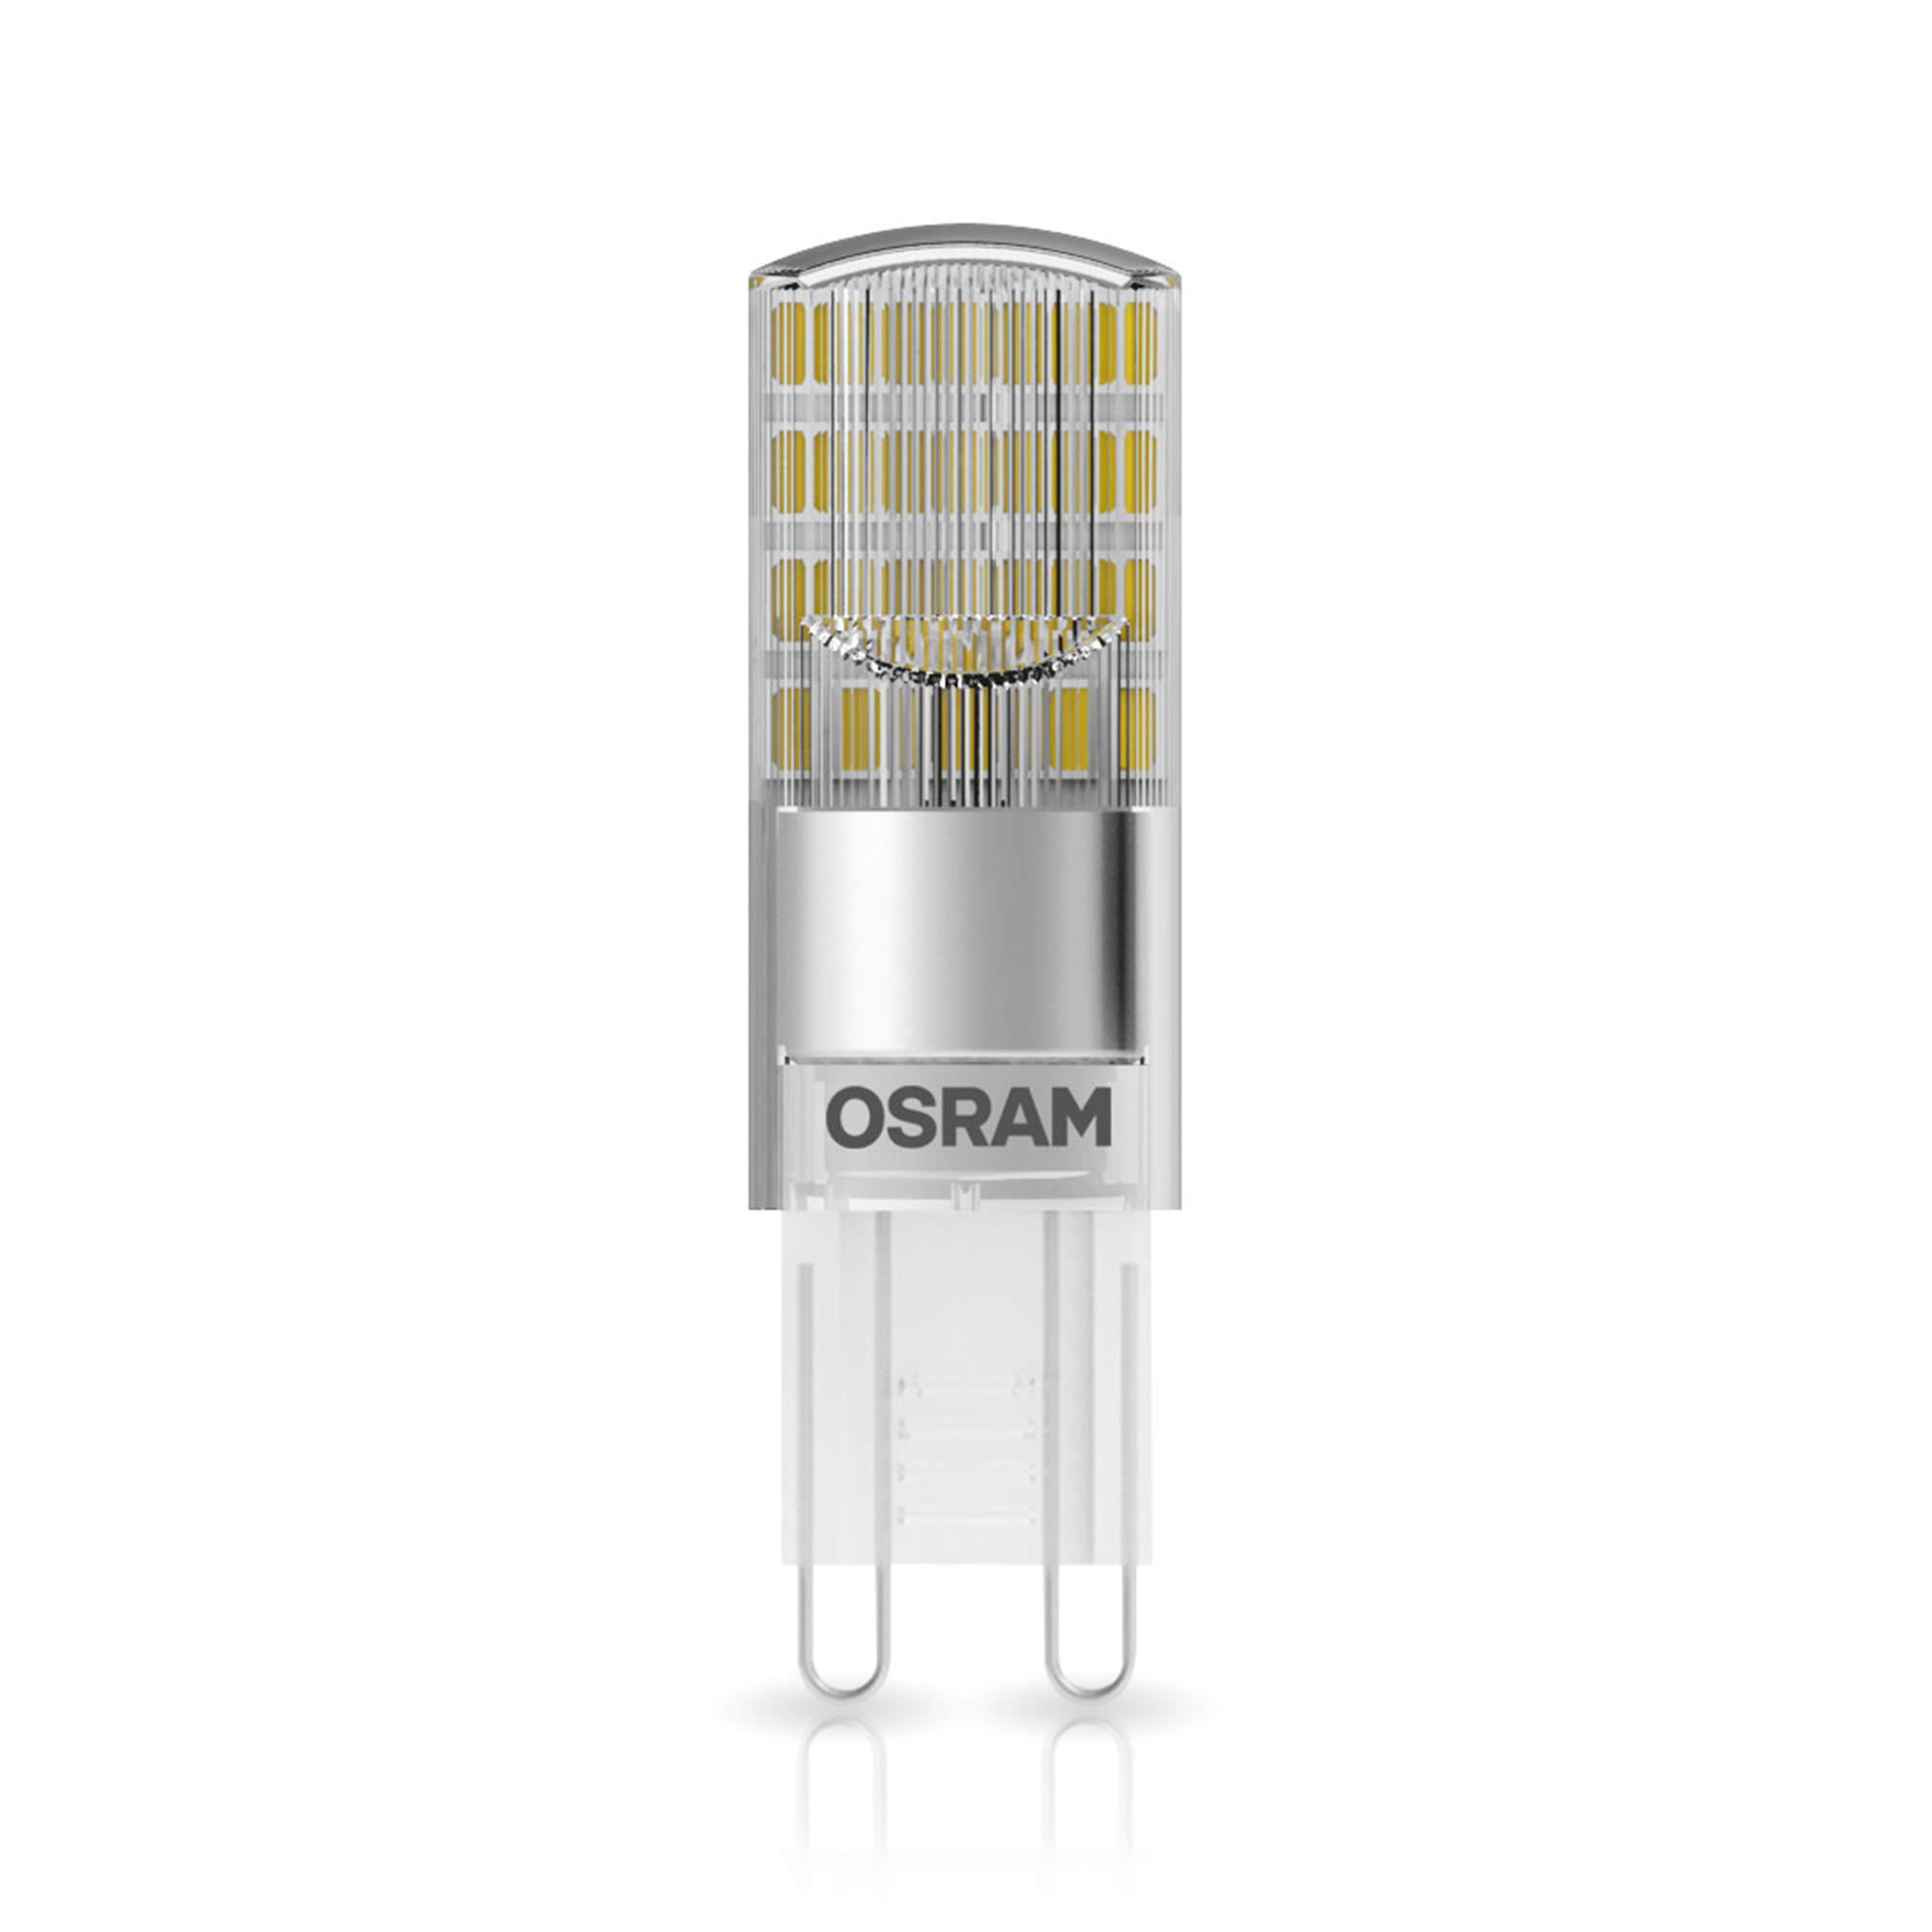 Osram LED STAR PIN 30 klar 2,6W 827 G9 320lm 2700K